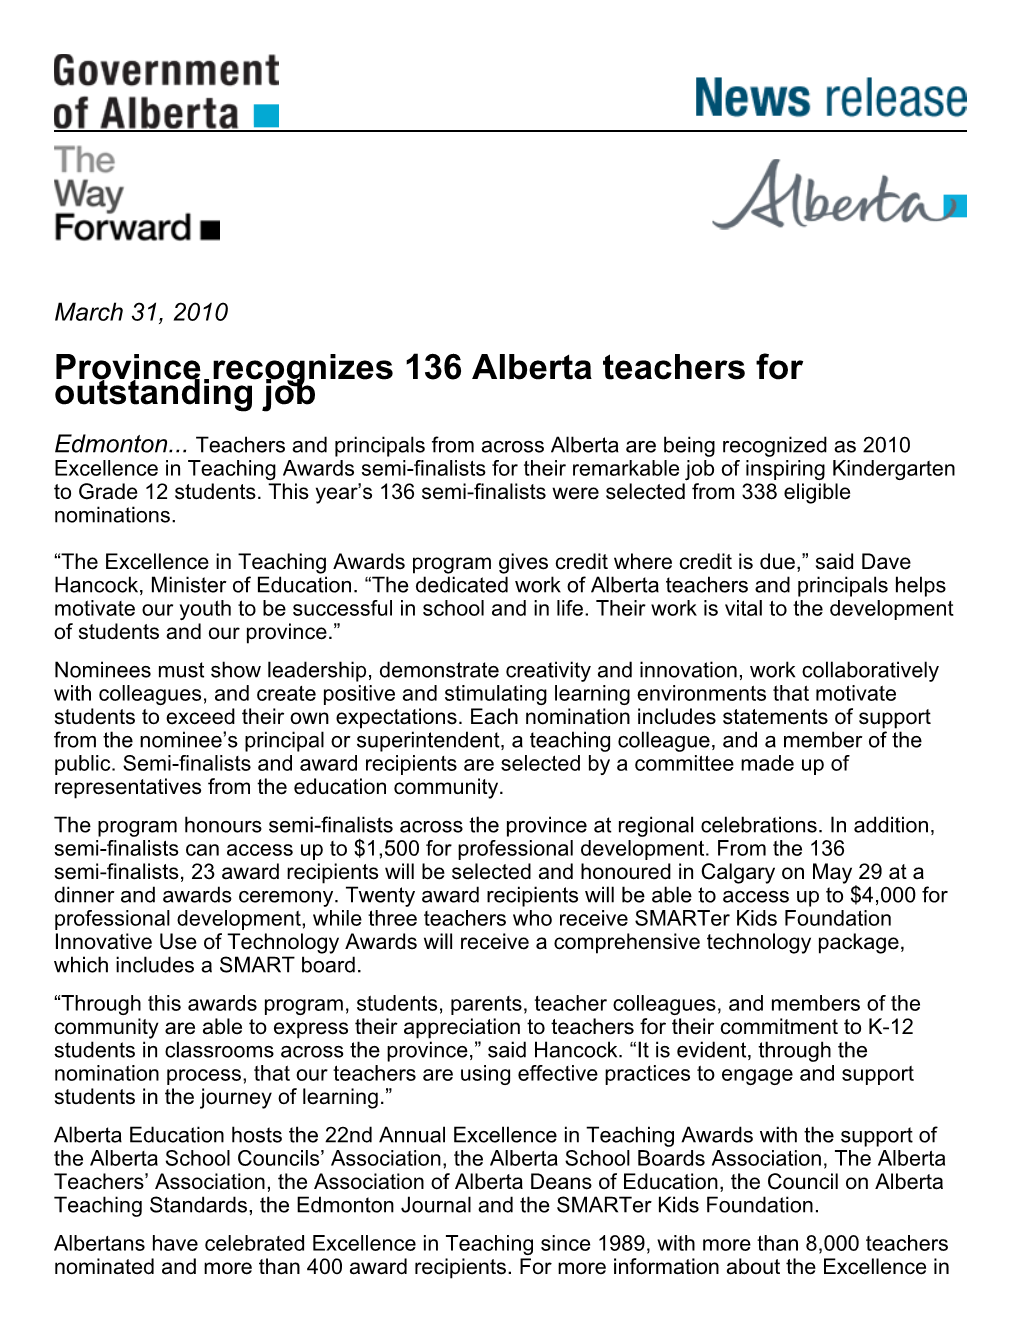 Province Recognizes 136 Alberta Teachers for Outstanding Job